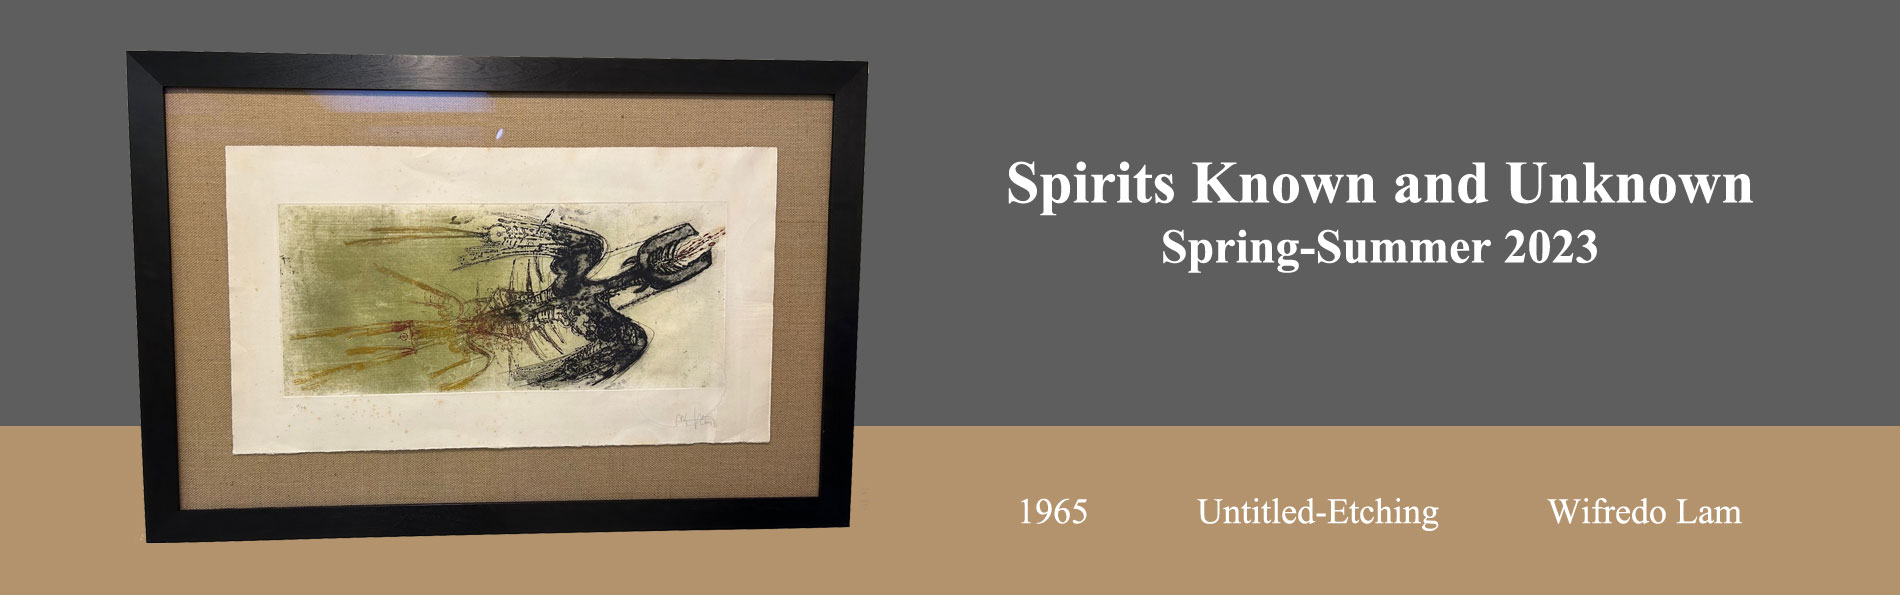 Spirits Known and Unknown exhibit